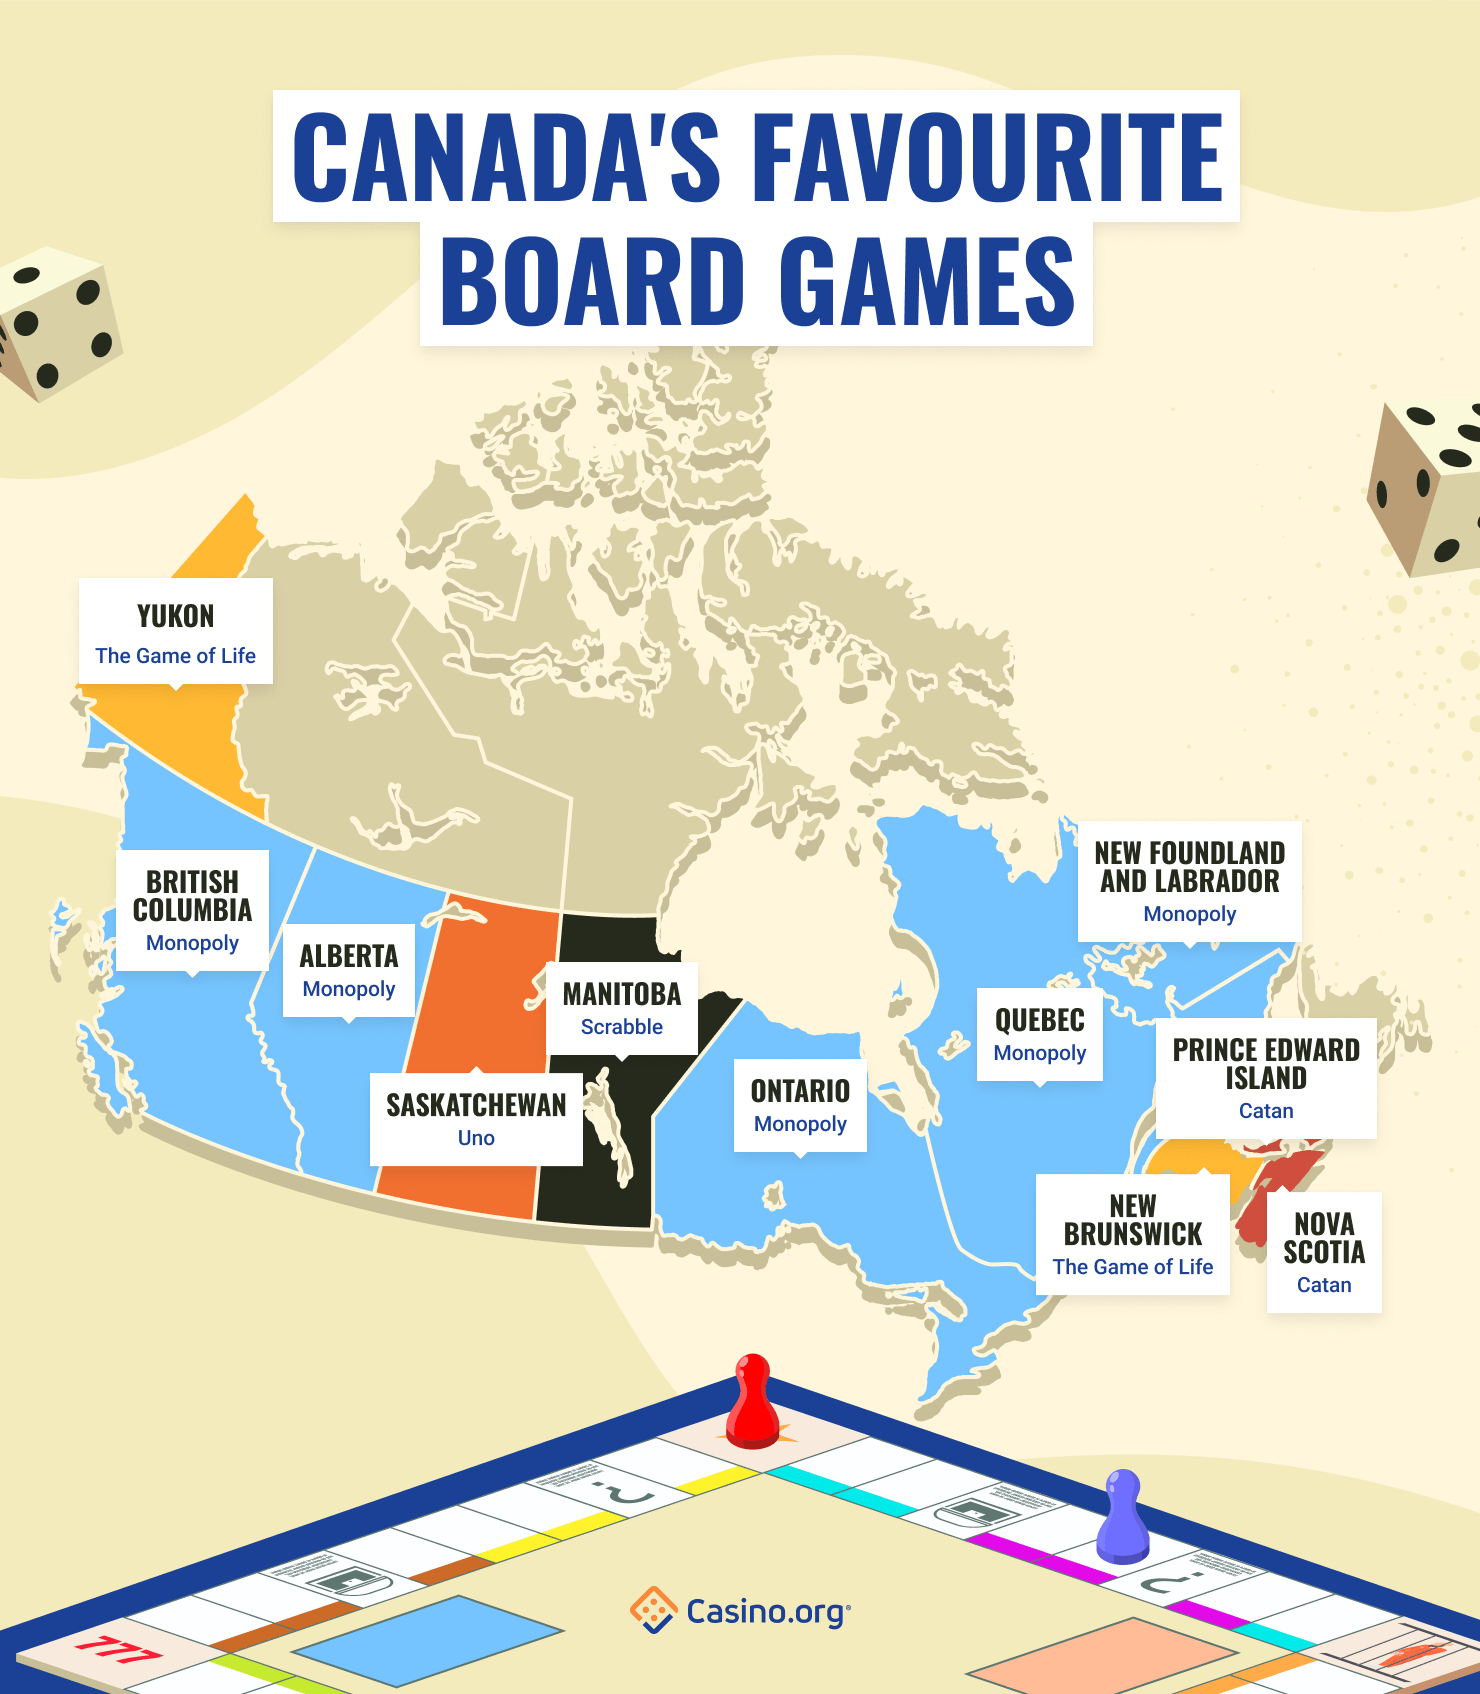 Permainan papan favorit Kanada